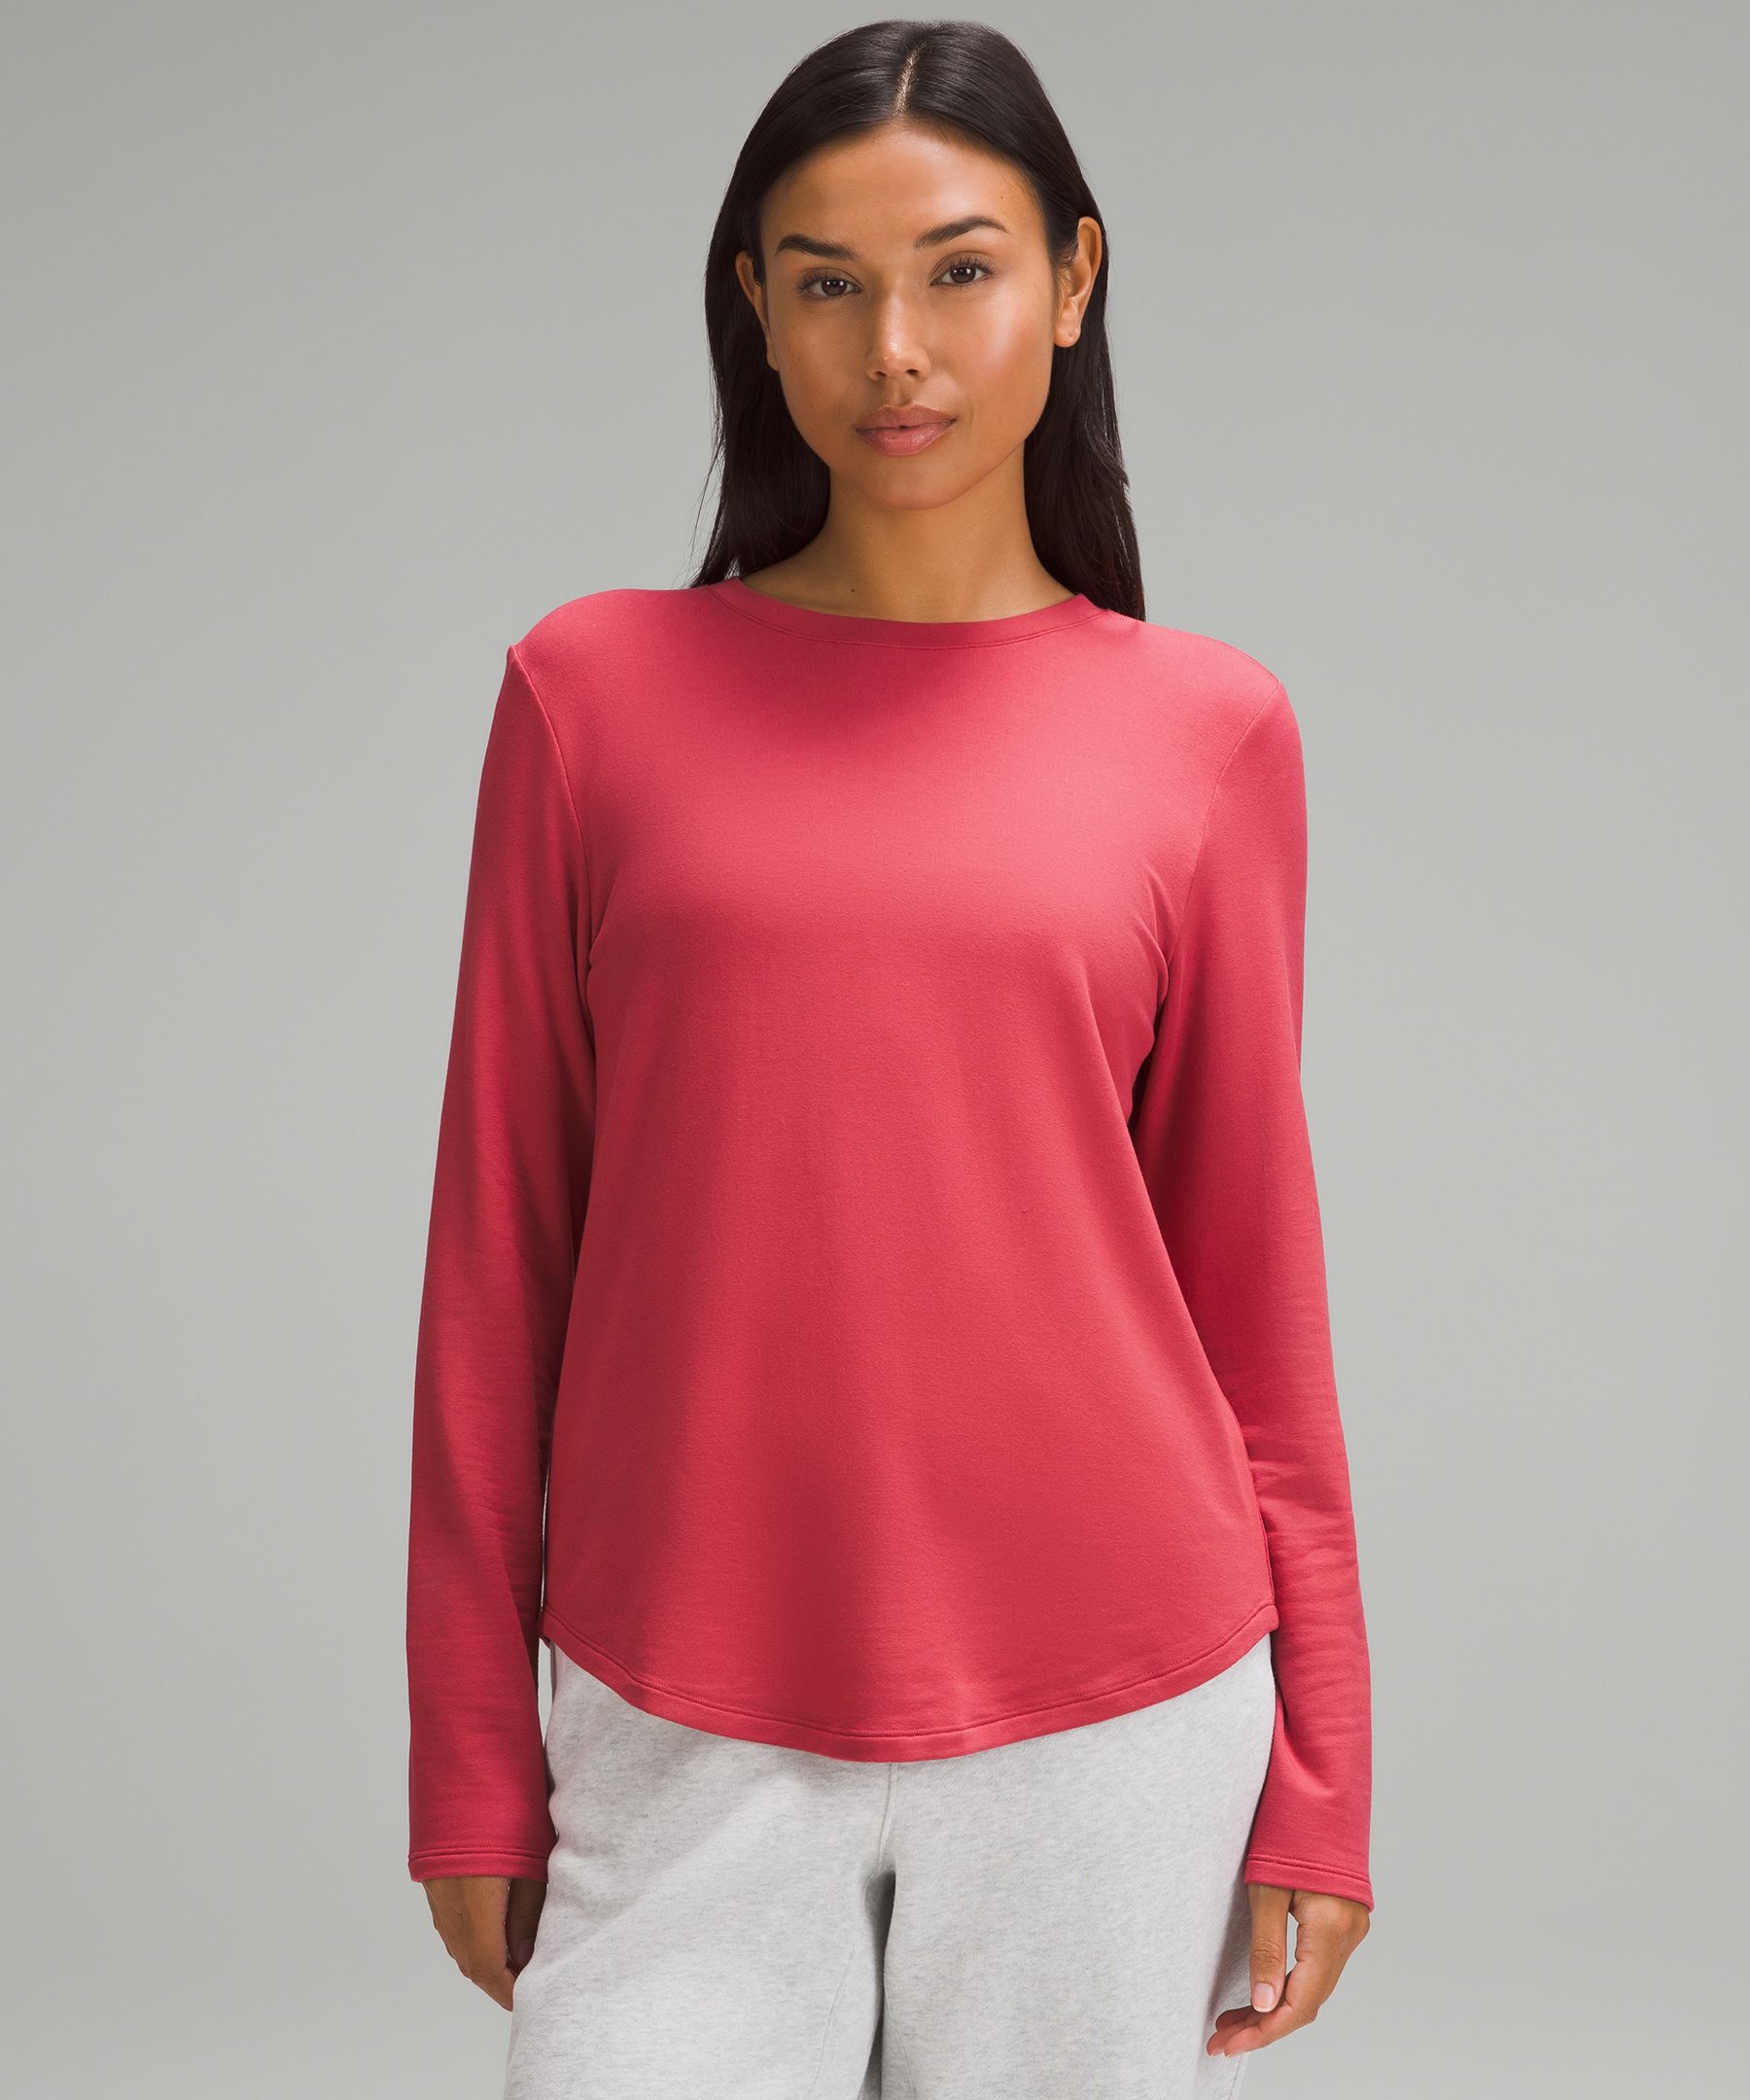 Lululemon Love Modal Fleece Long-Sleeve Shirt